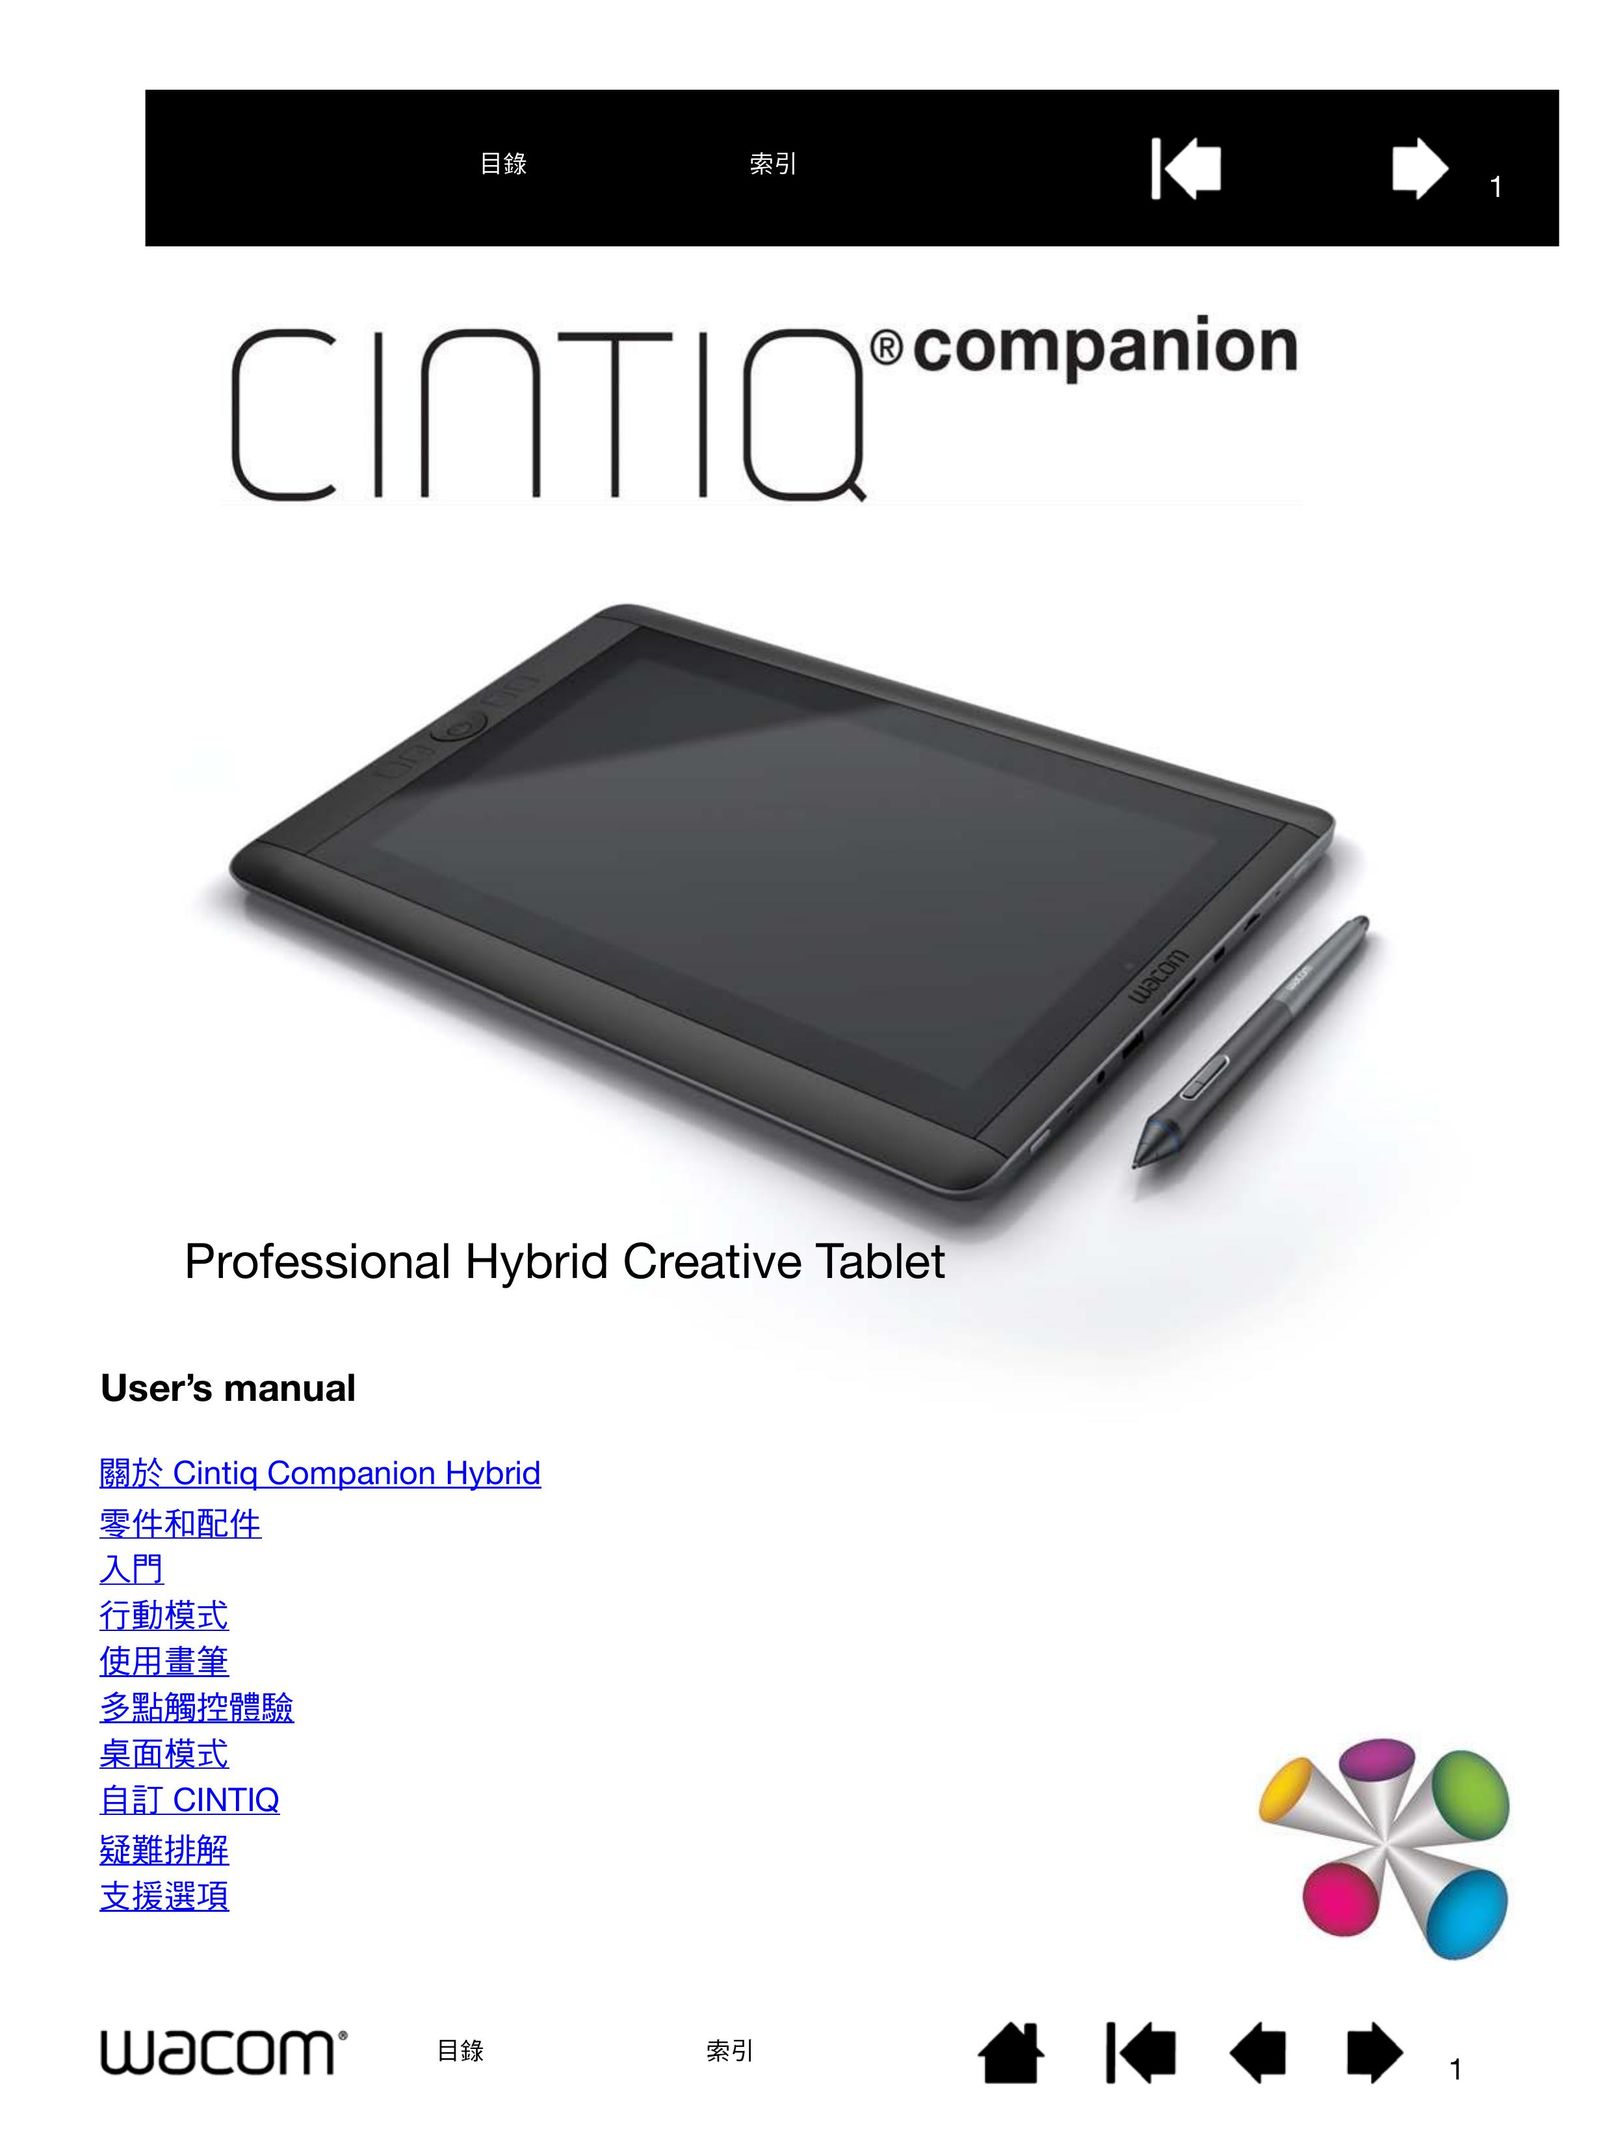 Wacom H0413 Graphics Tablet User Manual